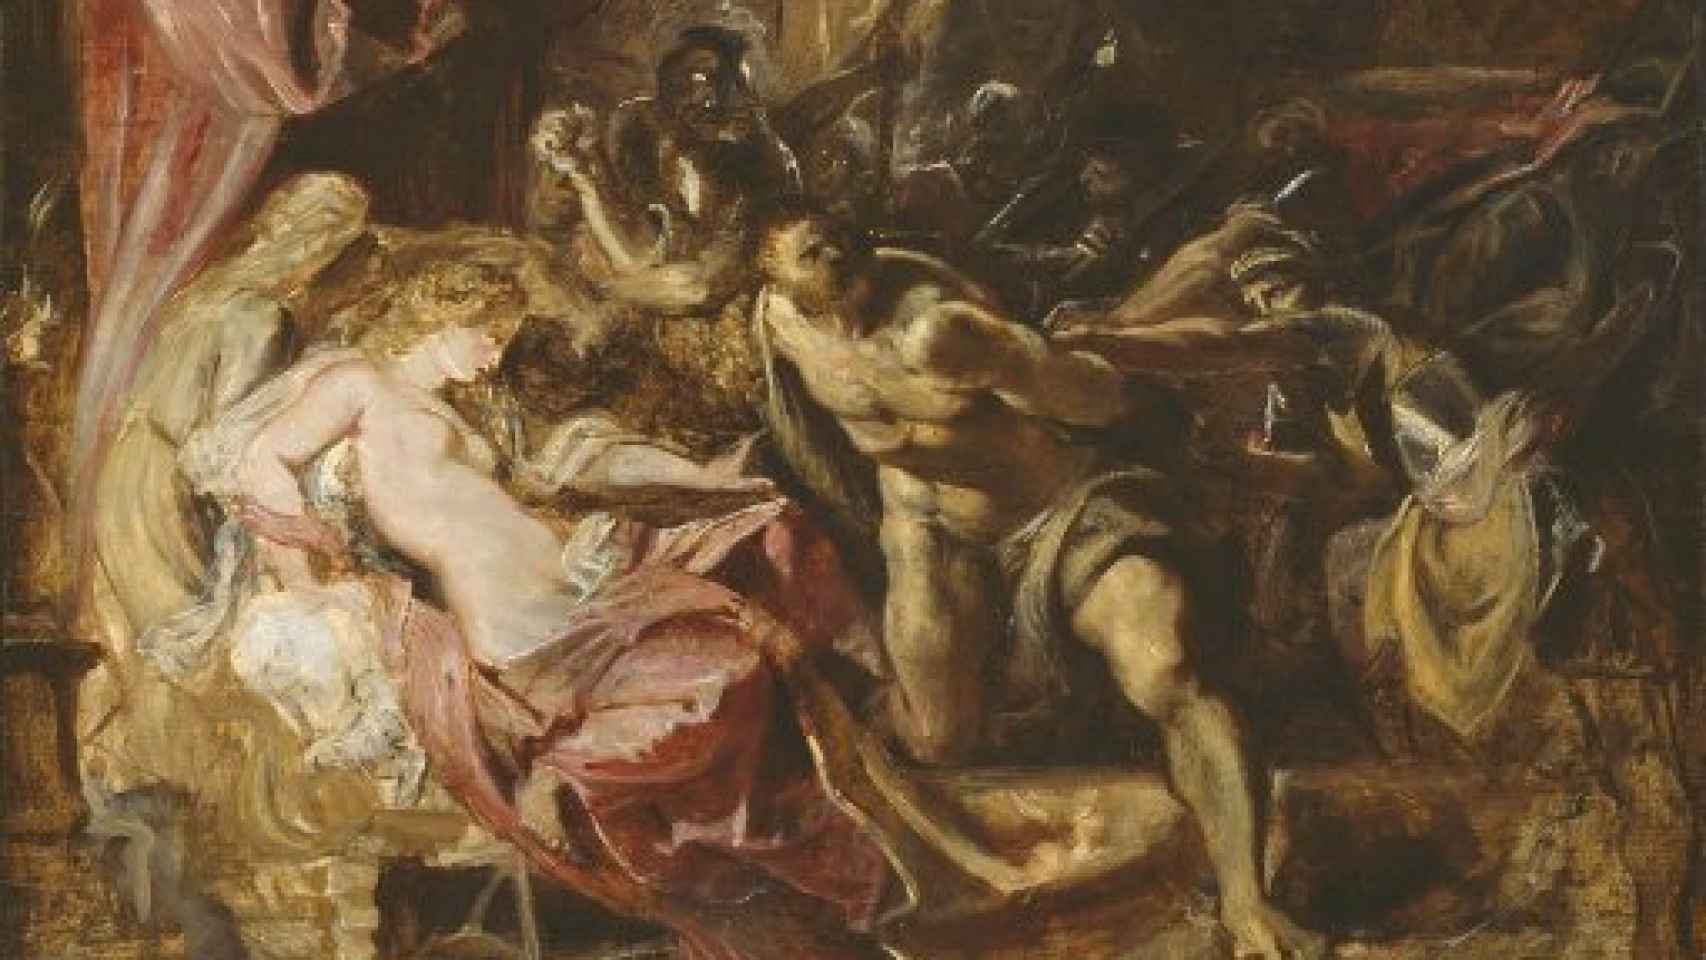 Image: Rubens, pintura en bruto